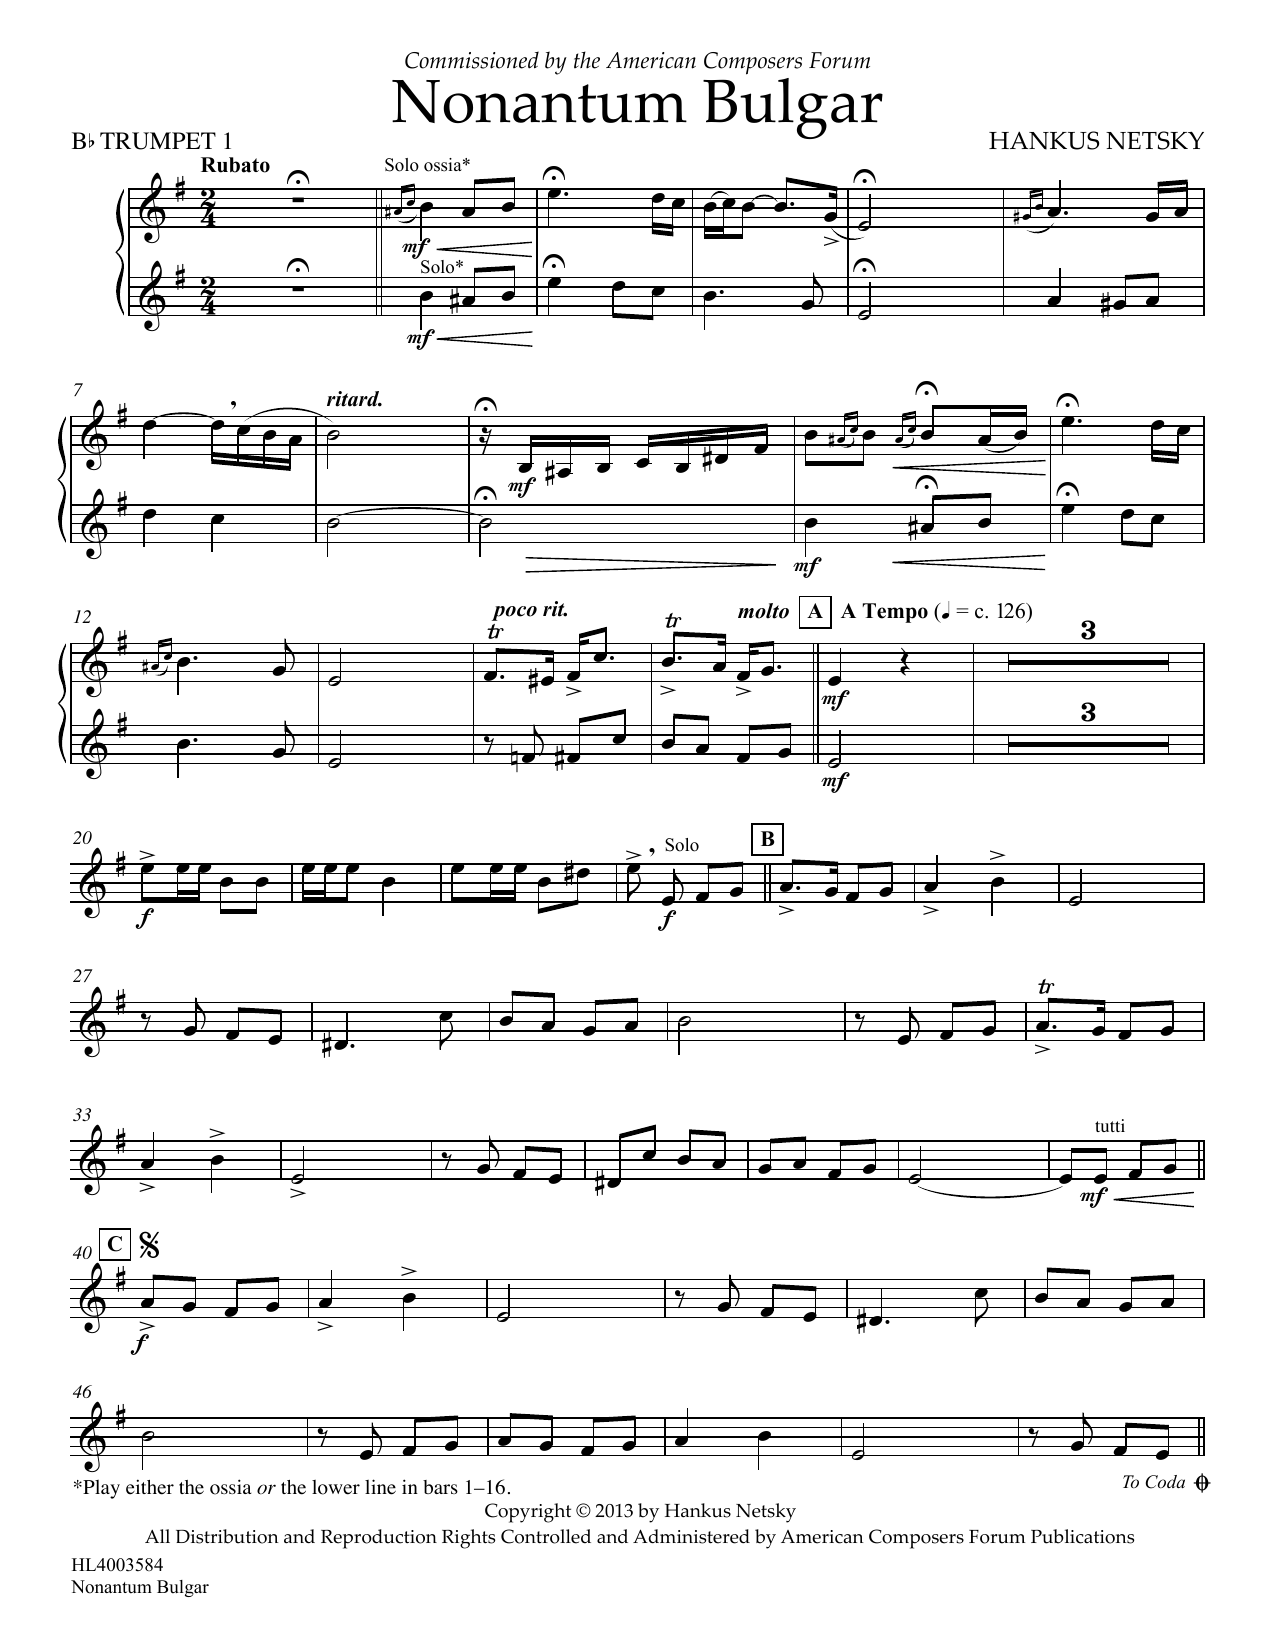 Download Hankus Netsky Nonantum Bulgar - Bb Trumpet 1 Sheet Music